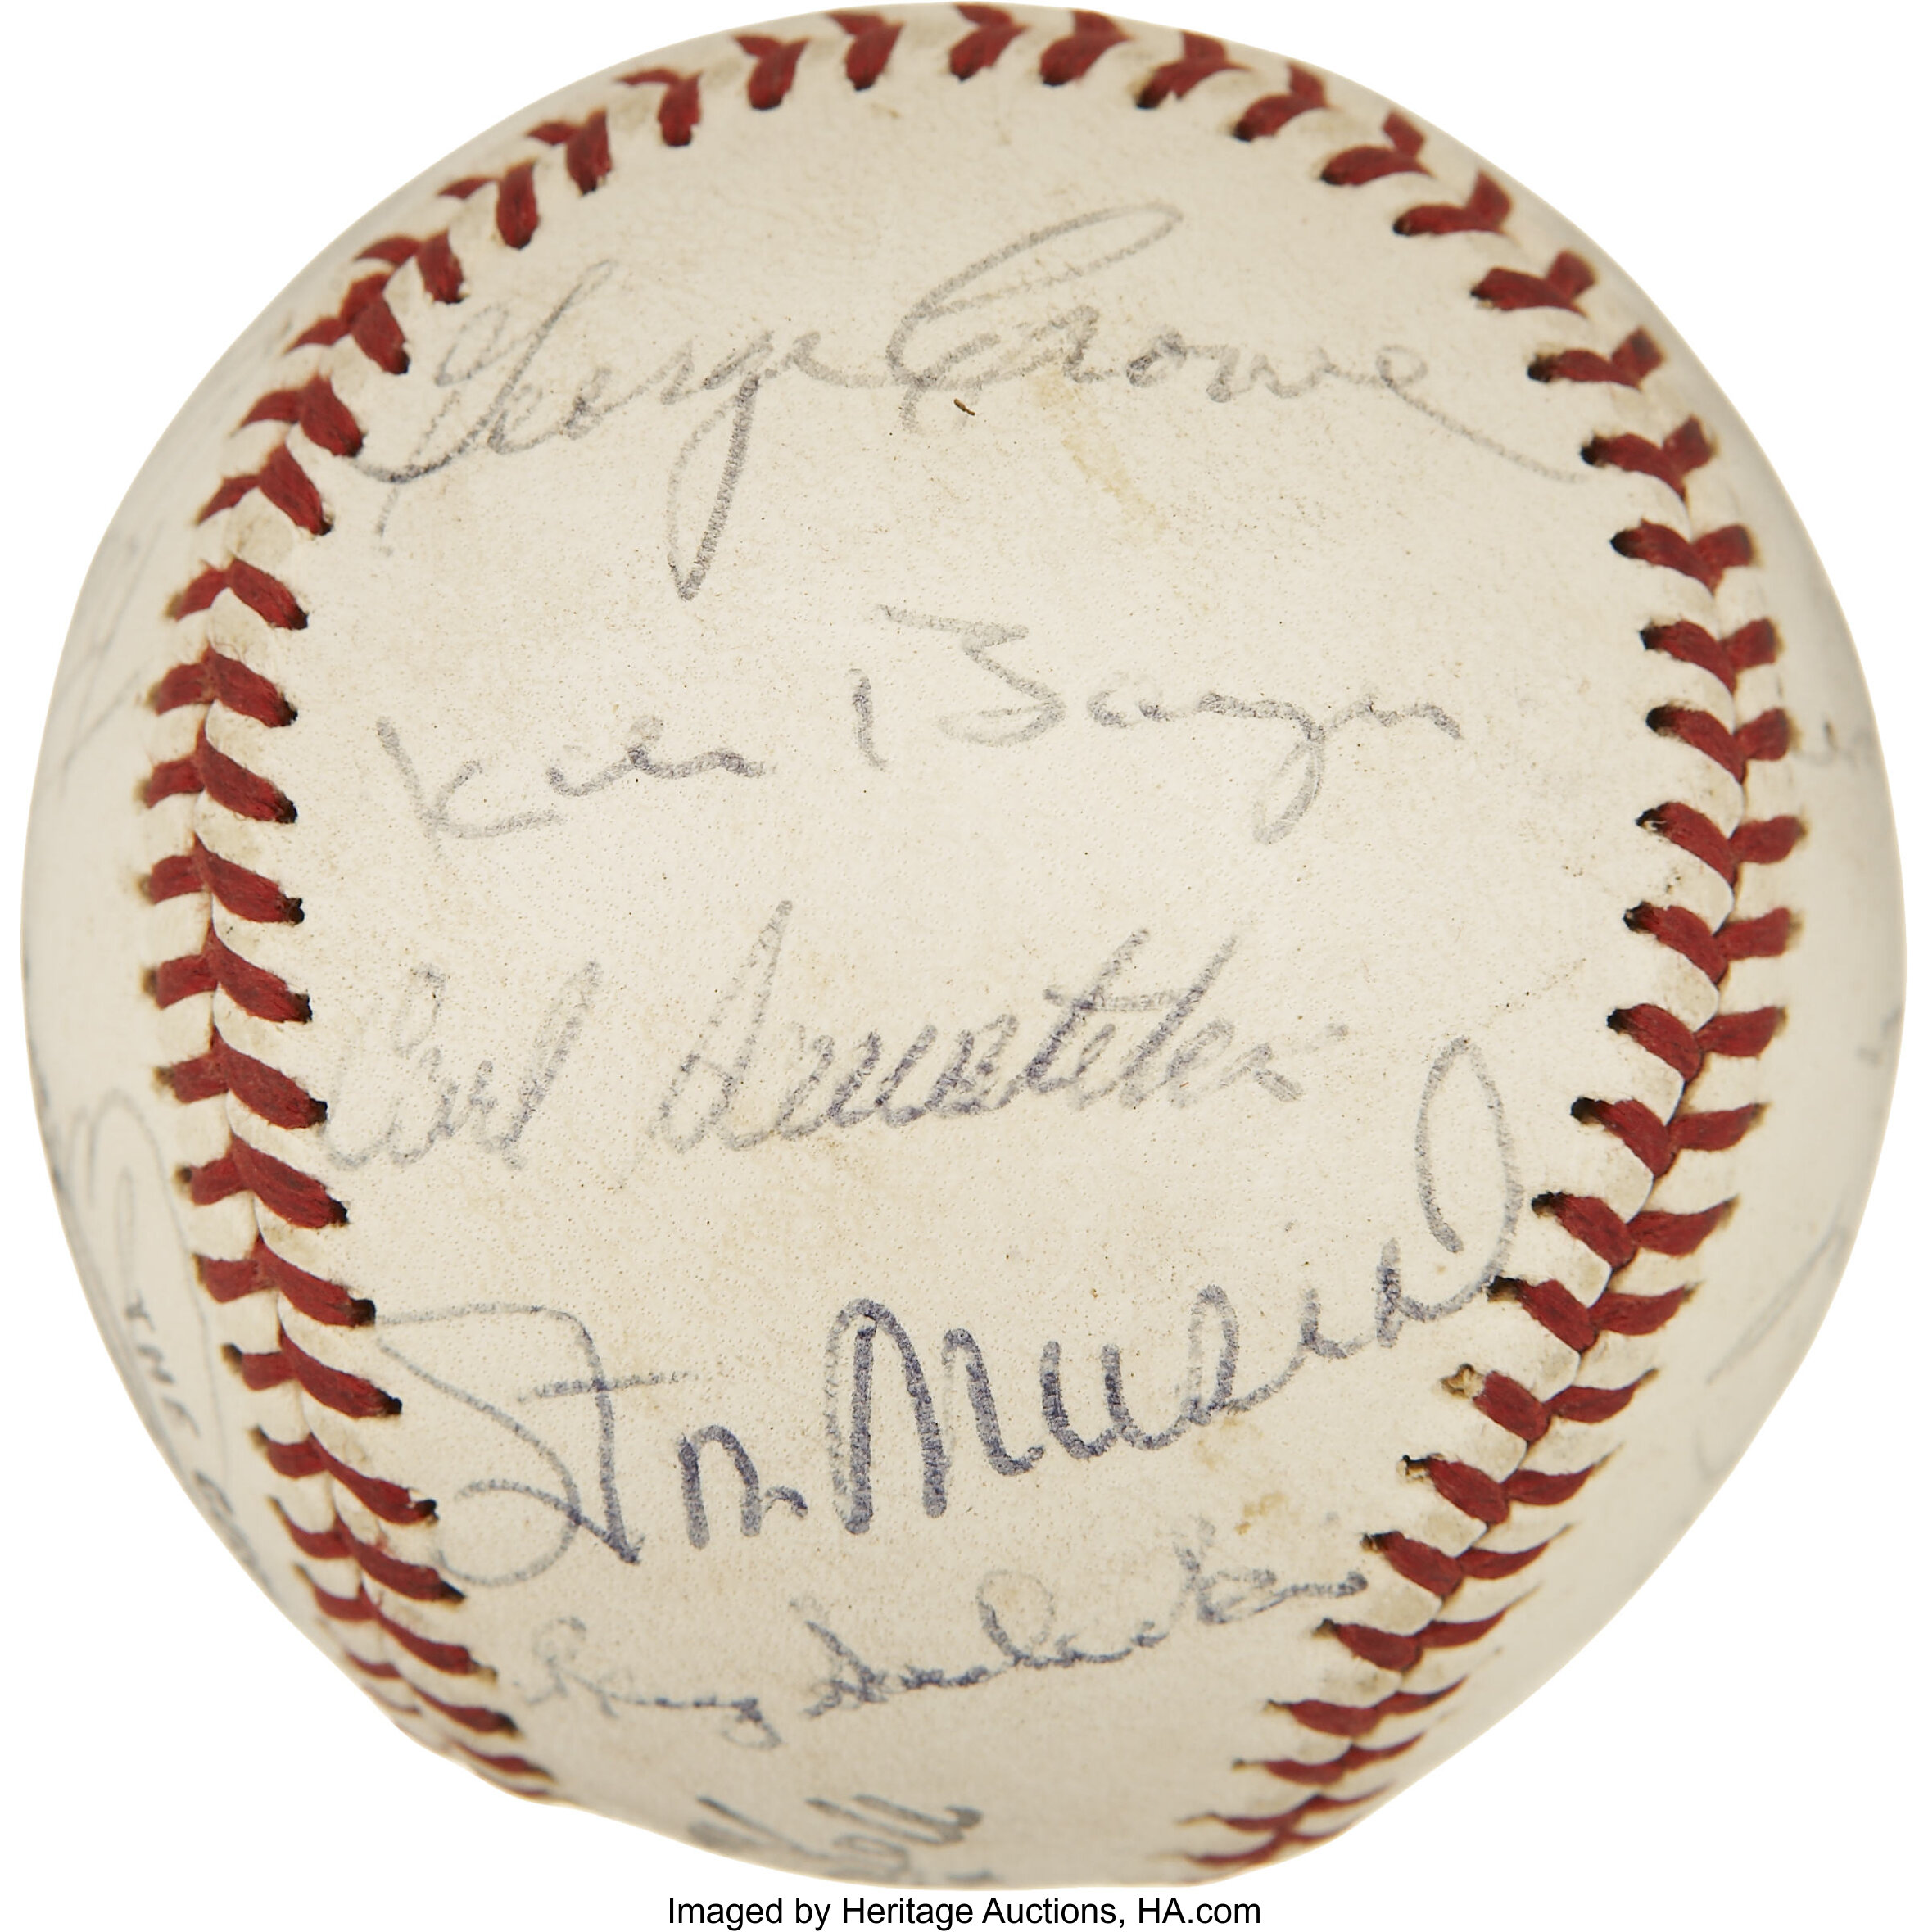 1961 St. Louis Cardinals Team Signed Baseball.... Autographs | Lot #44064 | Heritage Auctions